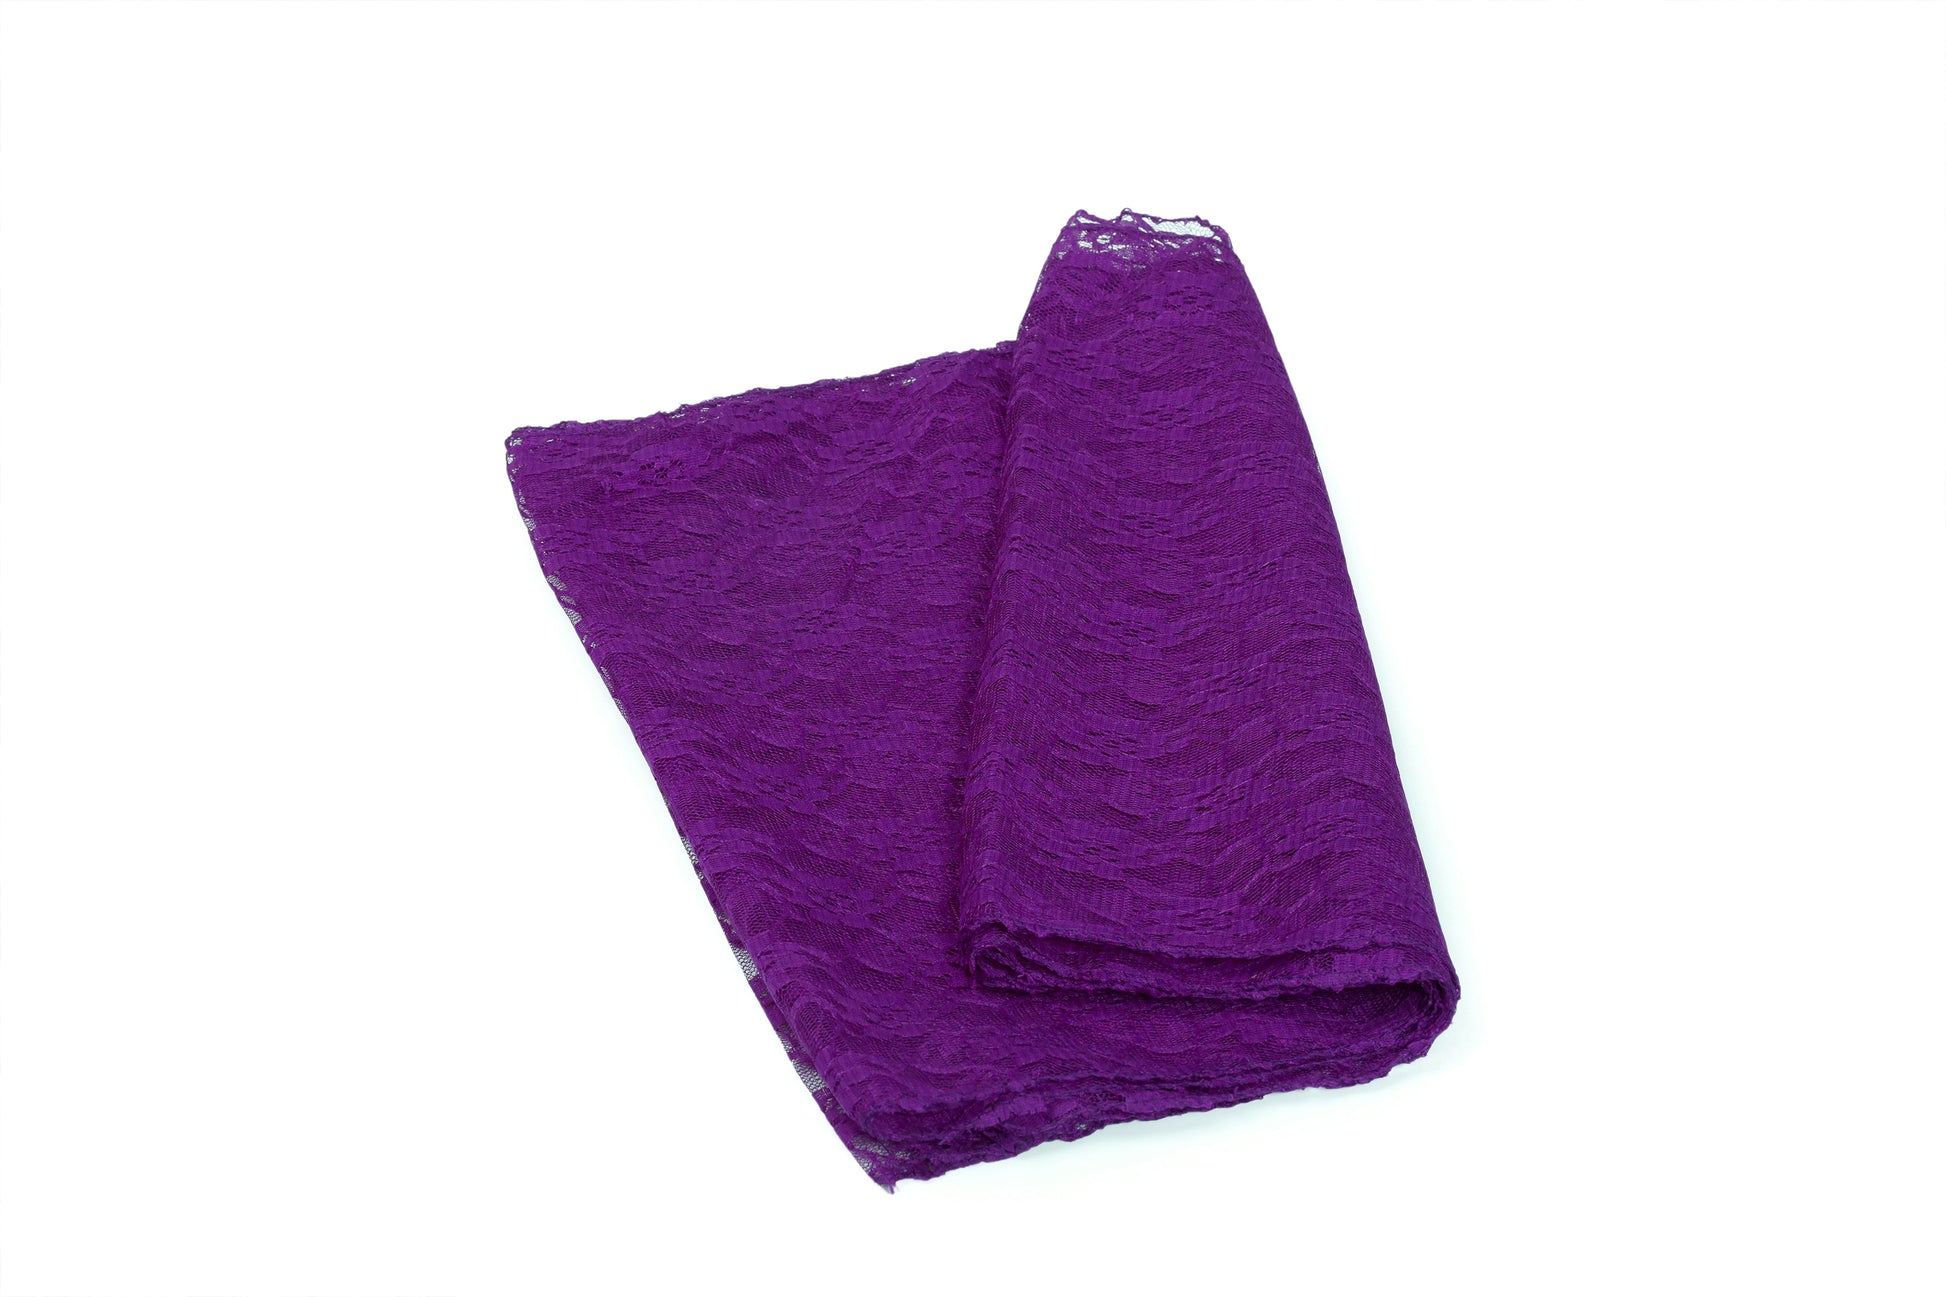 Cadbury Purple,b870b834-6066-4e20-879b-e1e2767bea3d